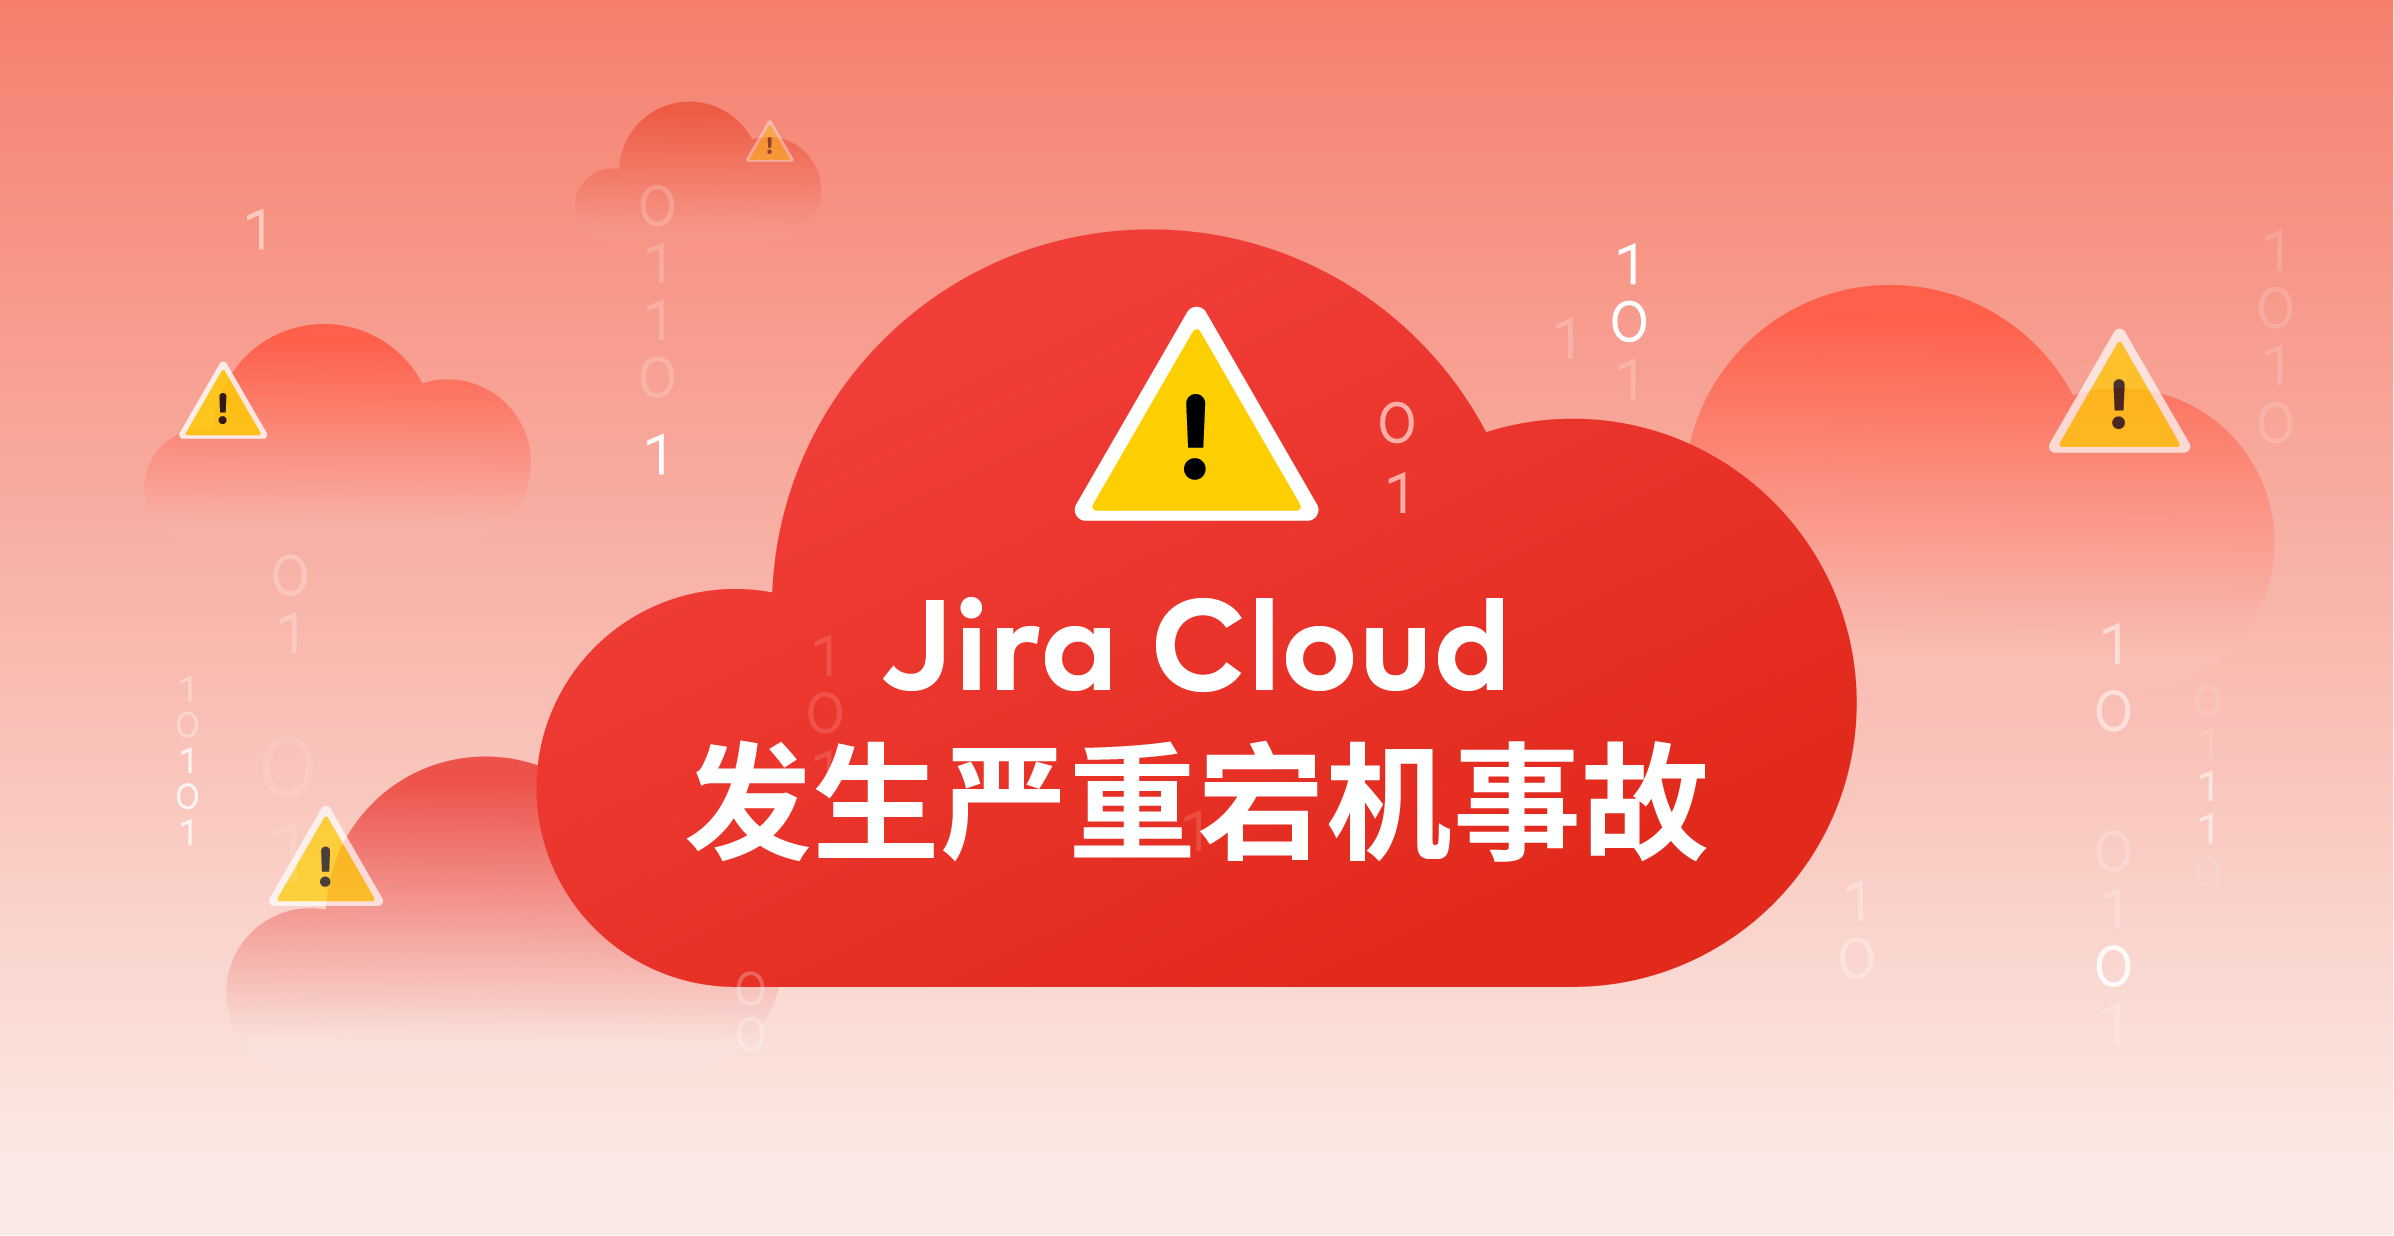 Jira 云产品宕机多日，业界热议上云如何保障数据安全